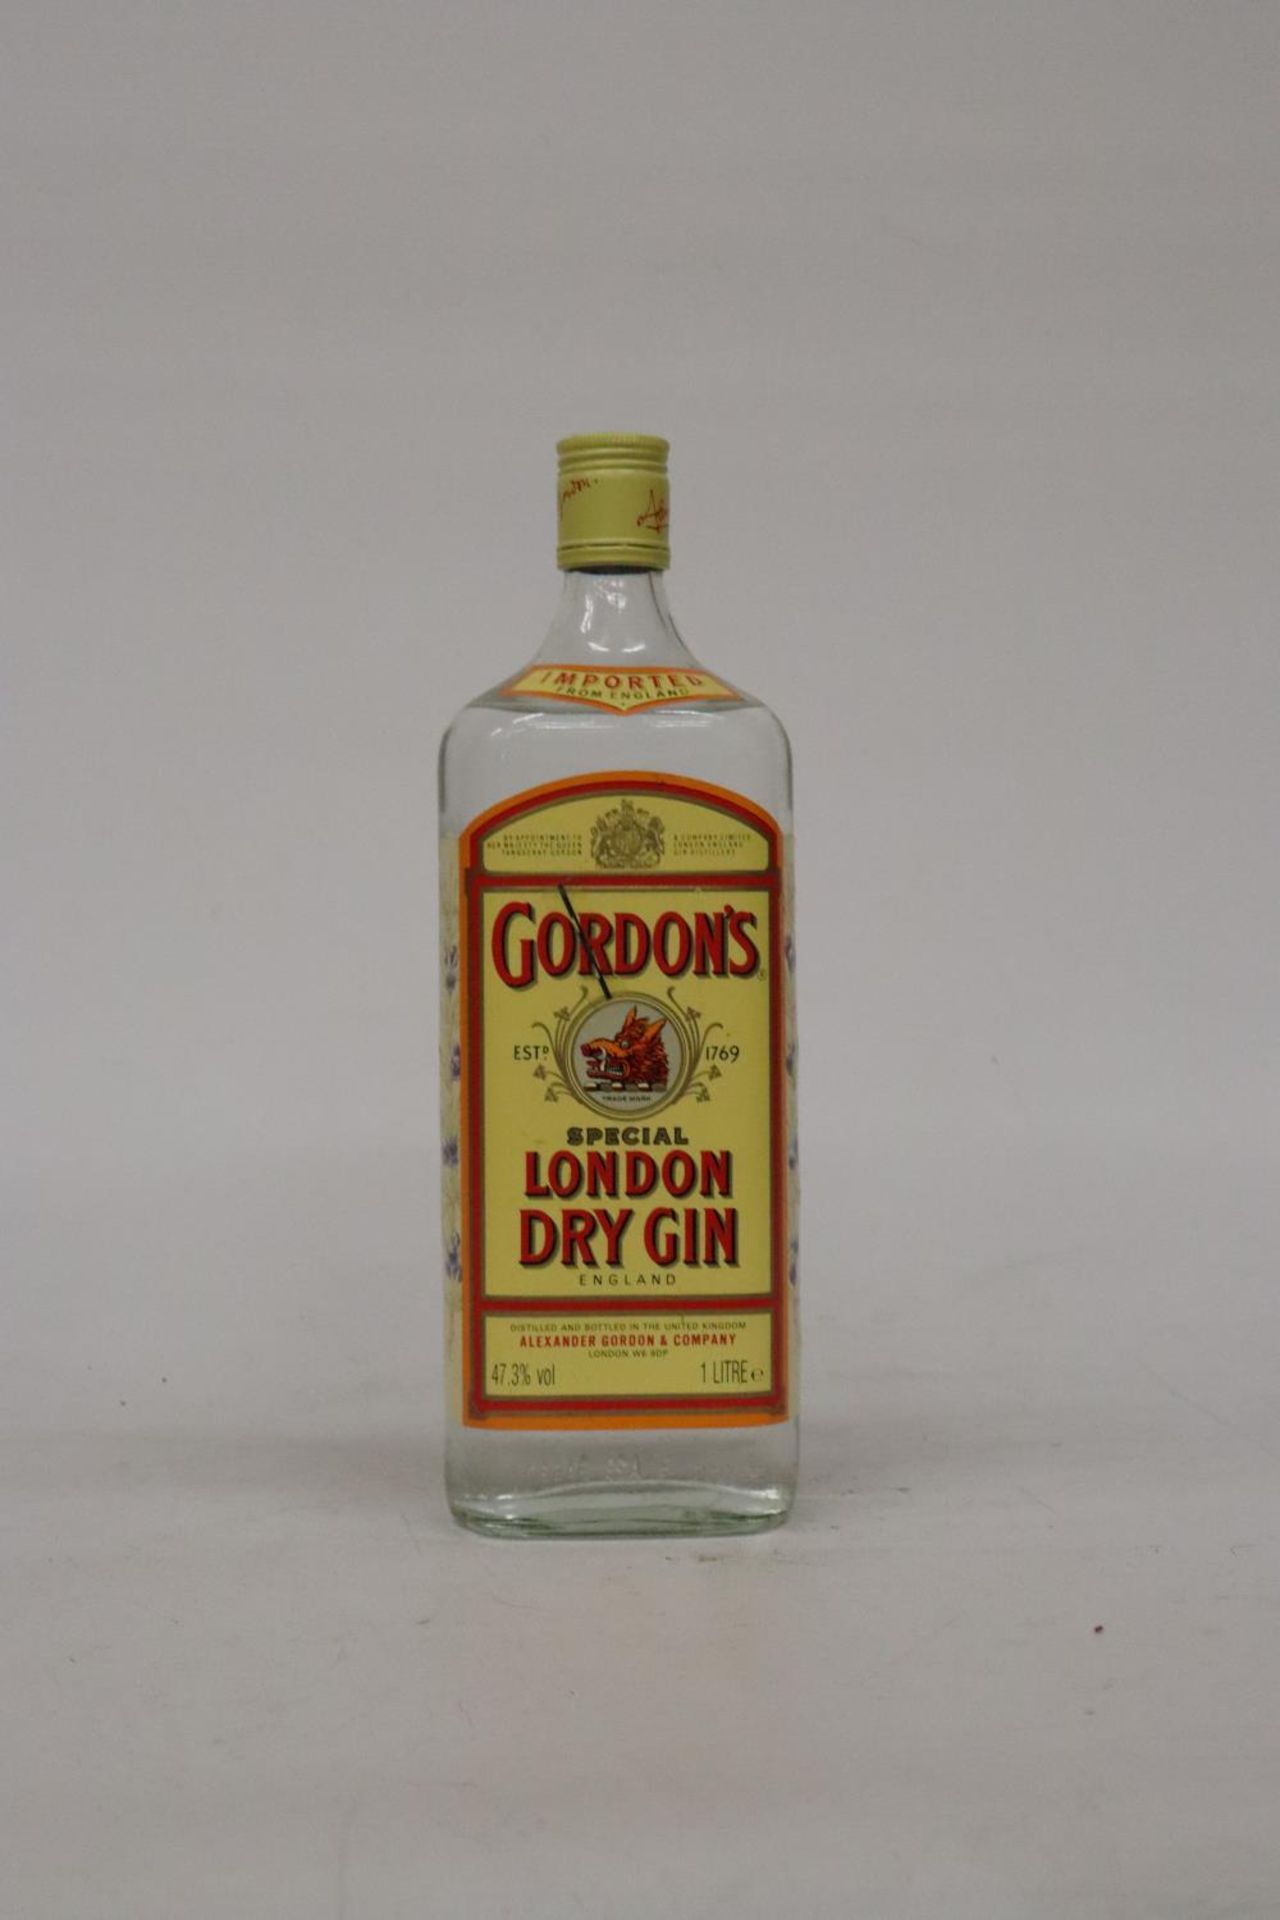 A 1L BOTTLE OF OF GORDONS LONDON DRY GIN